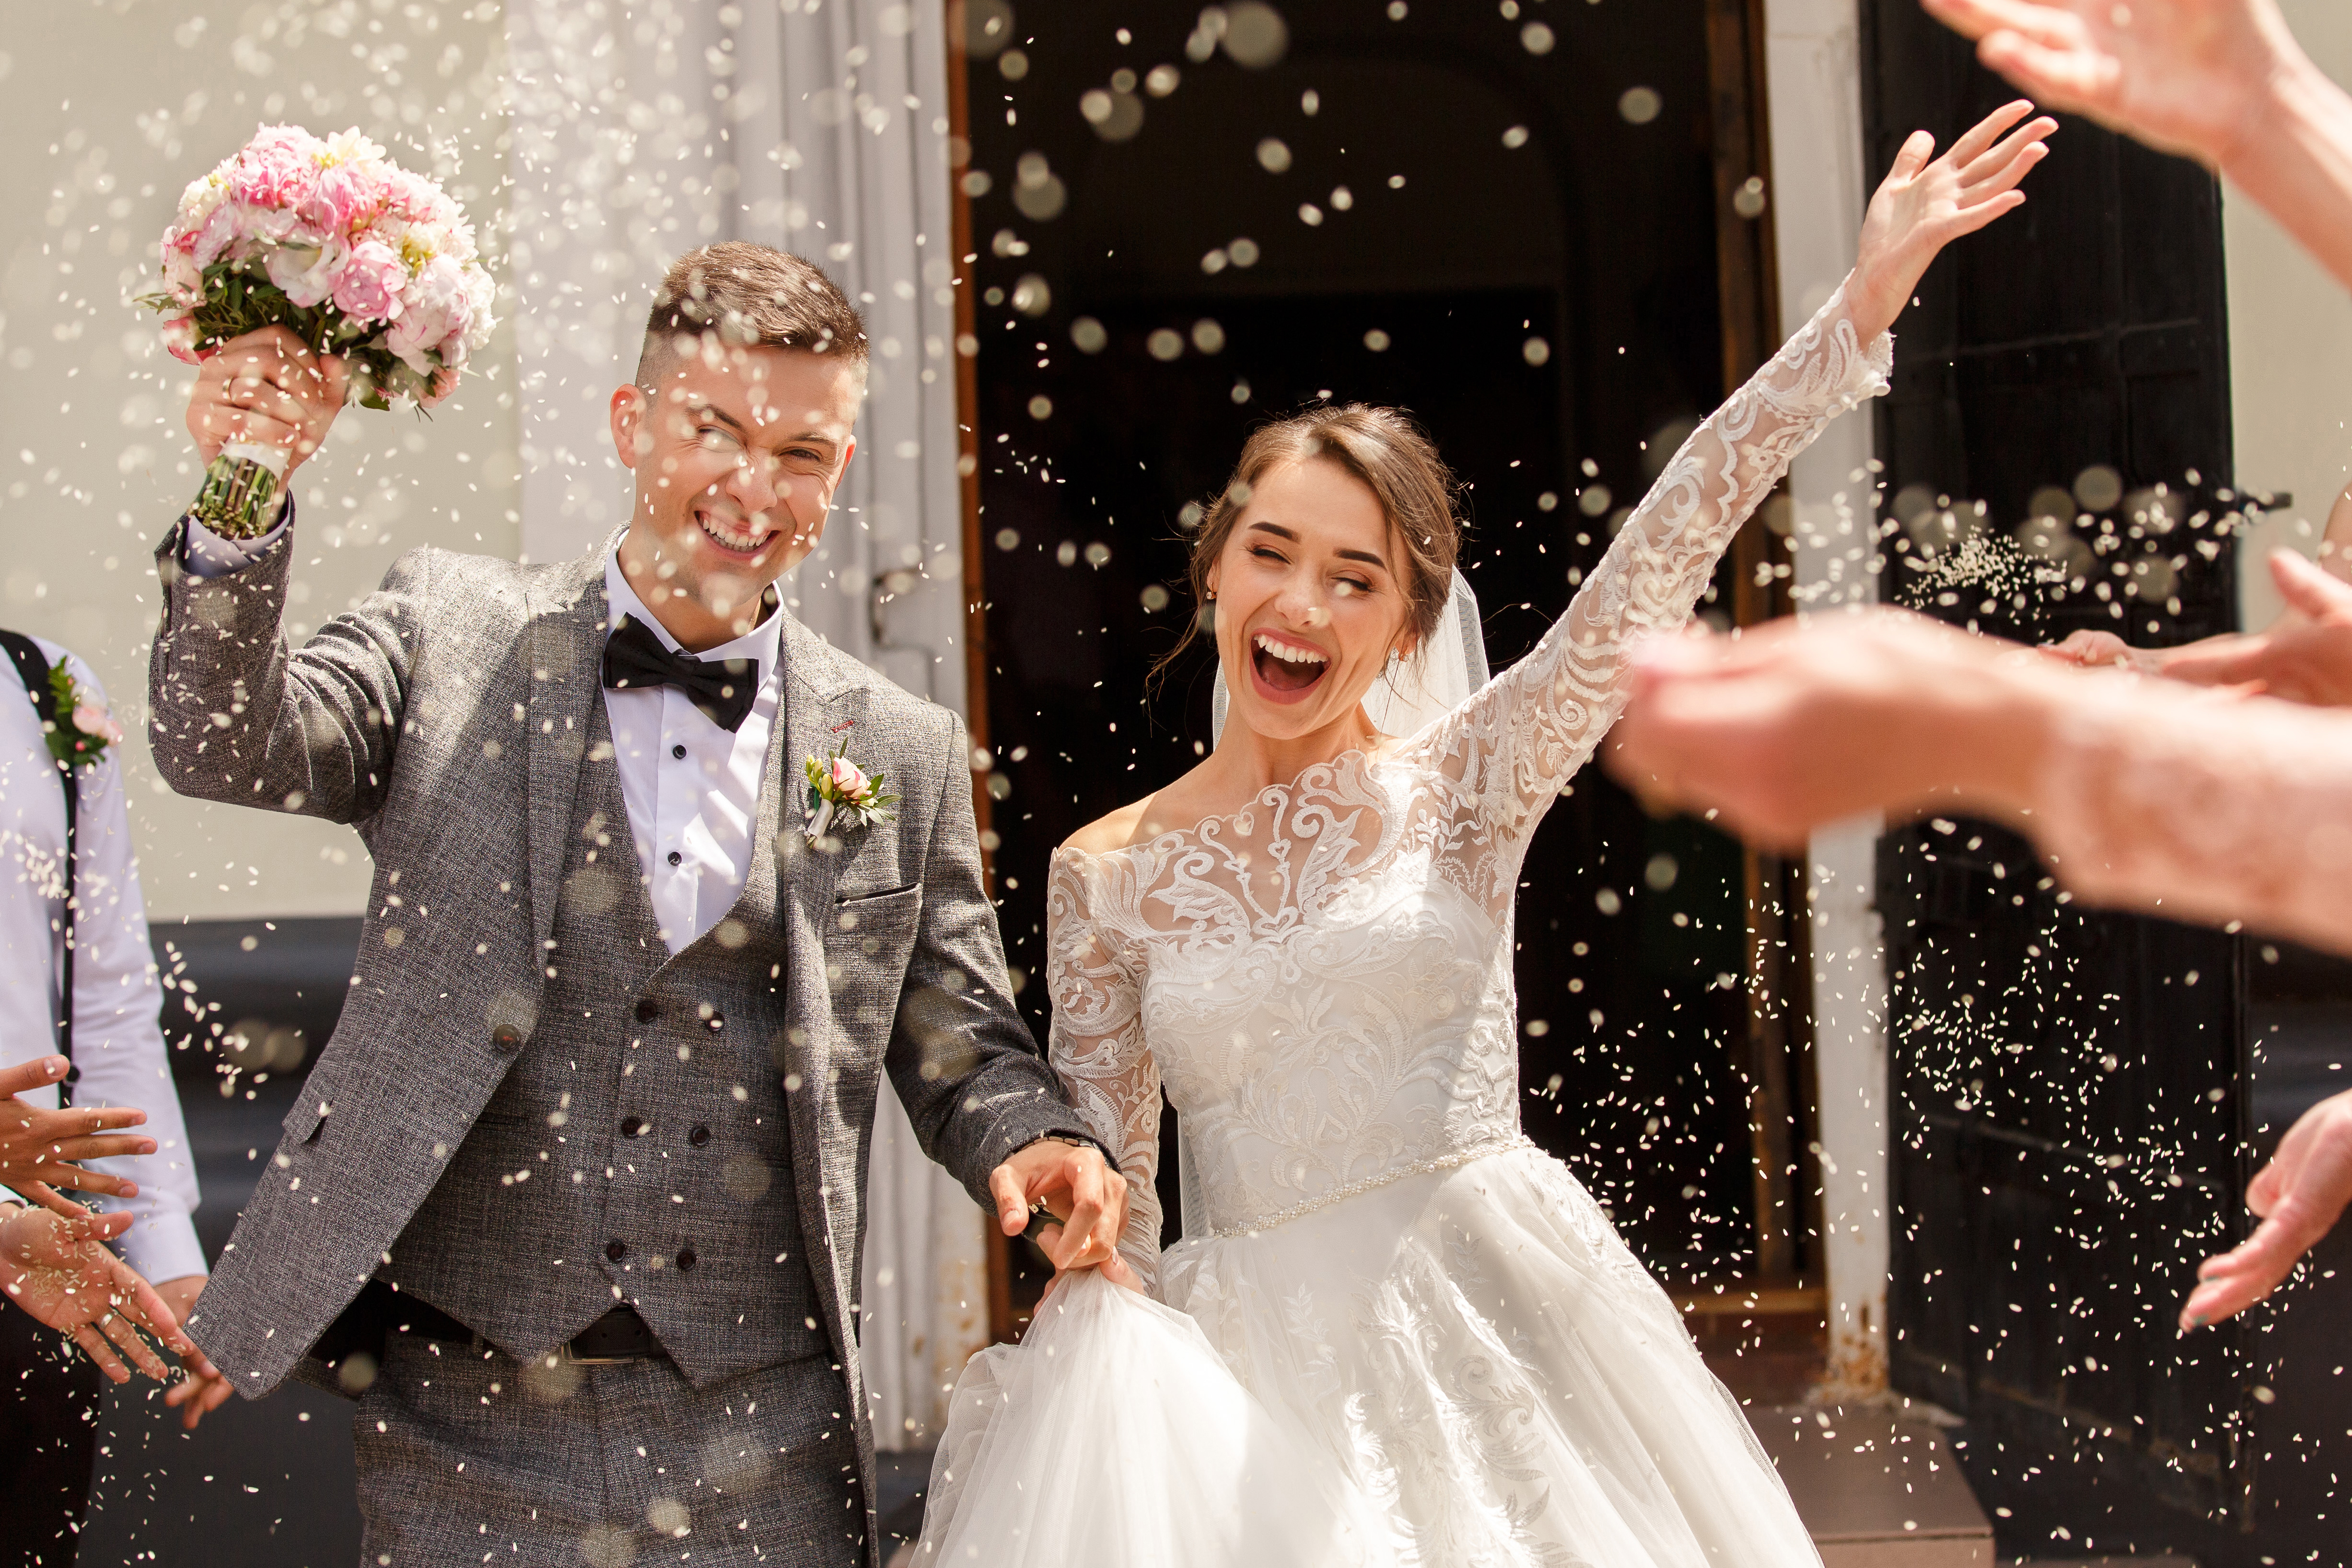 Novios en su boda | Foto: Shutterstock